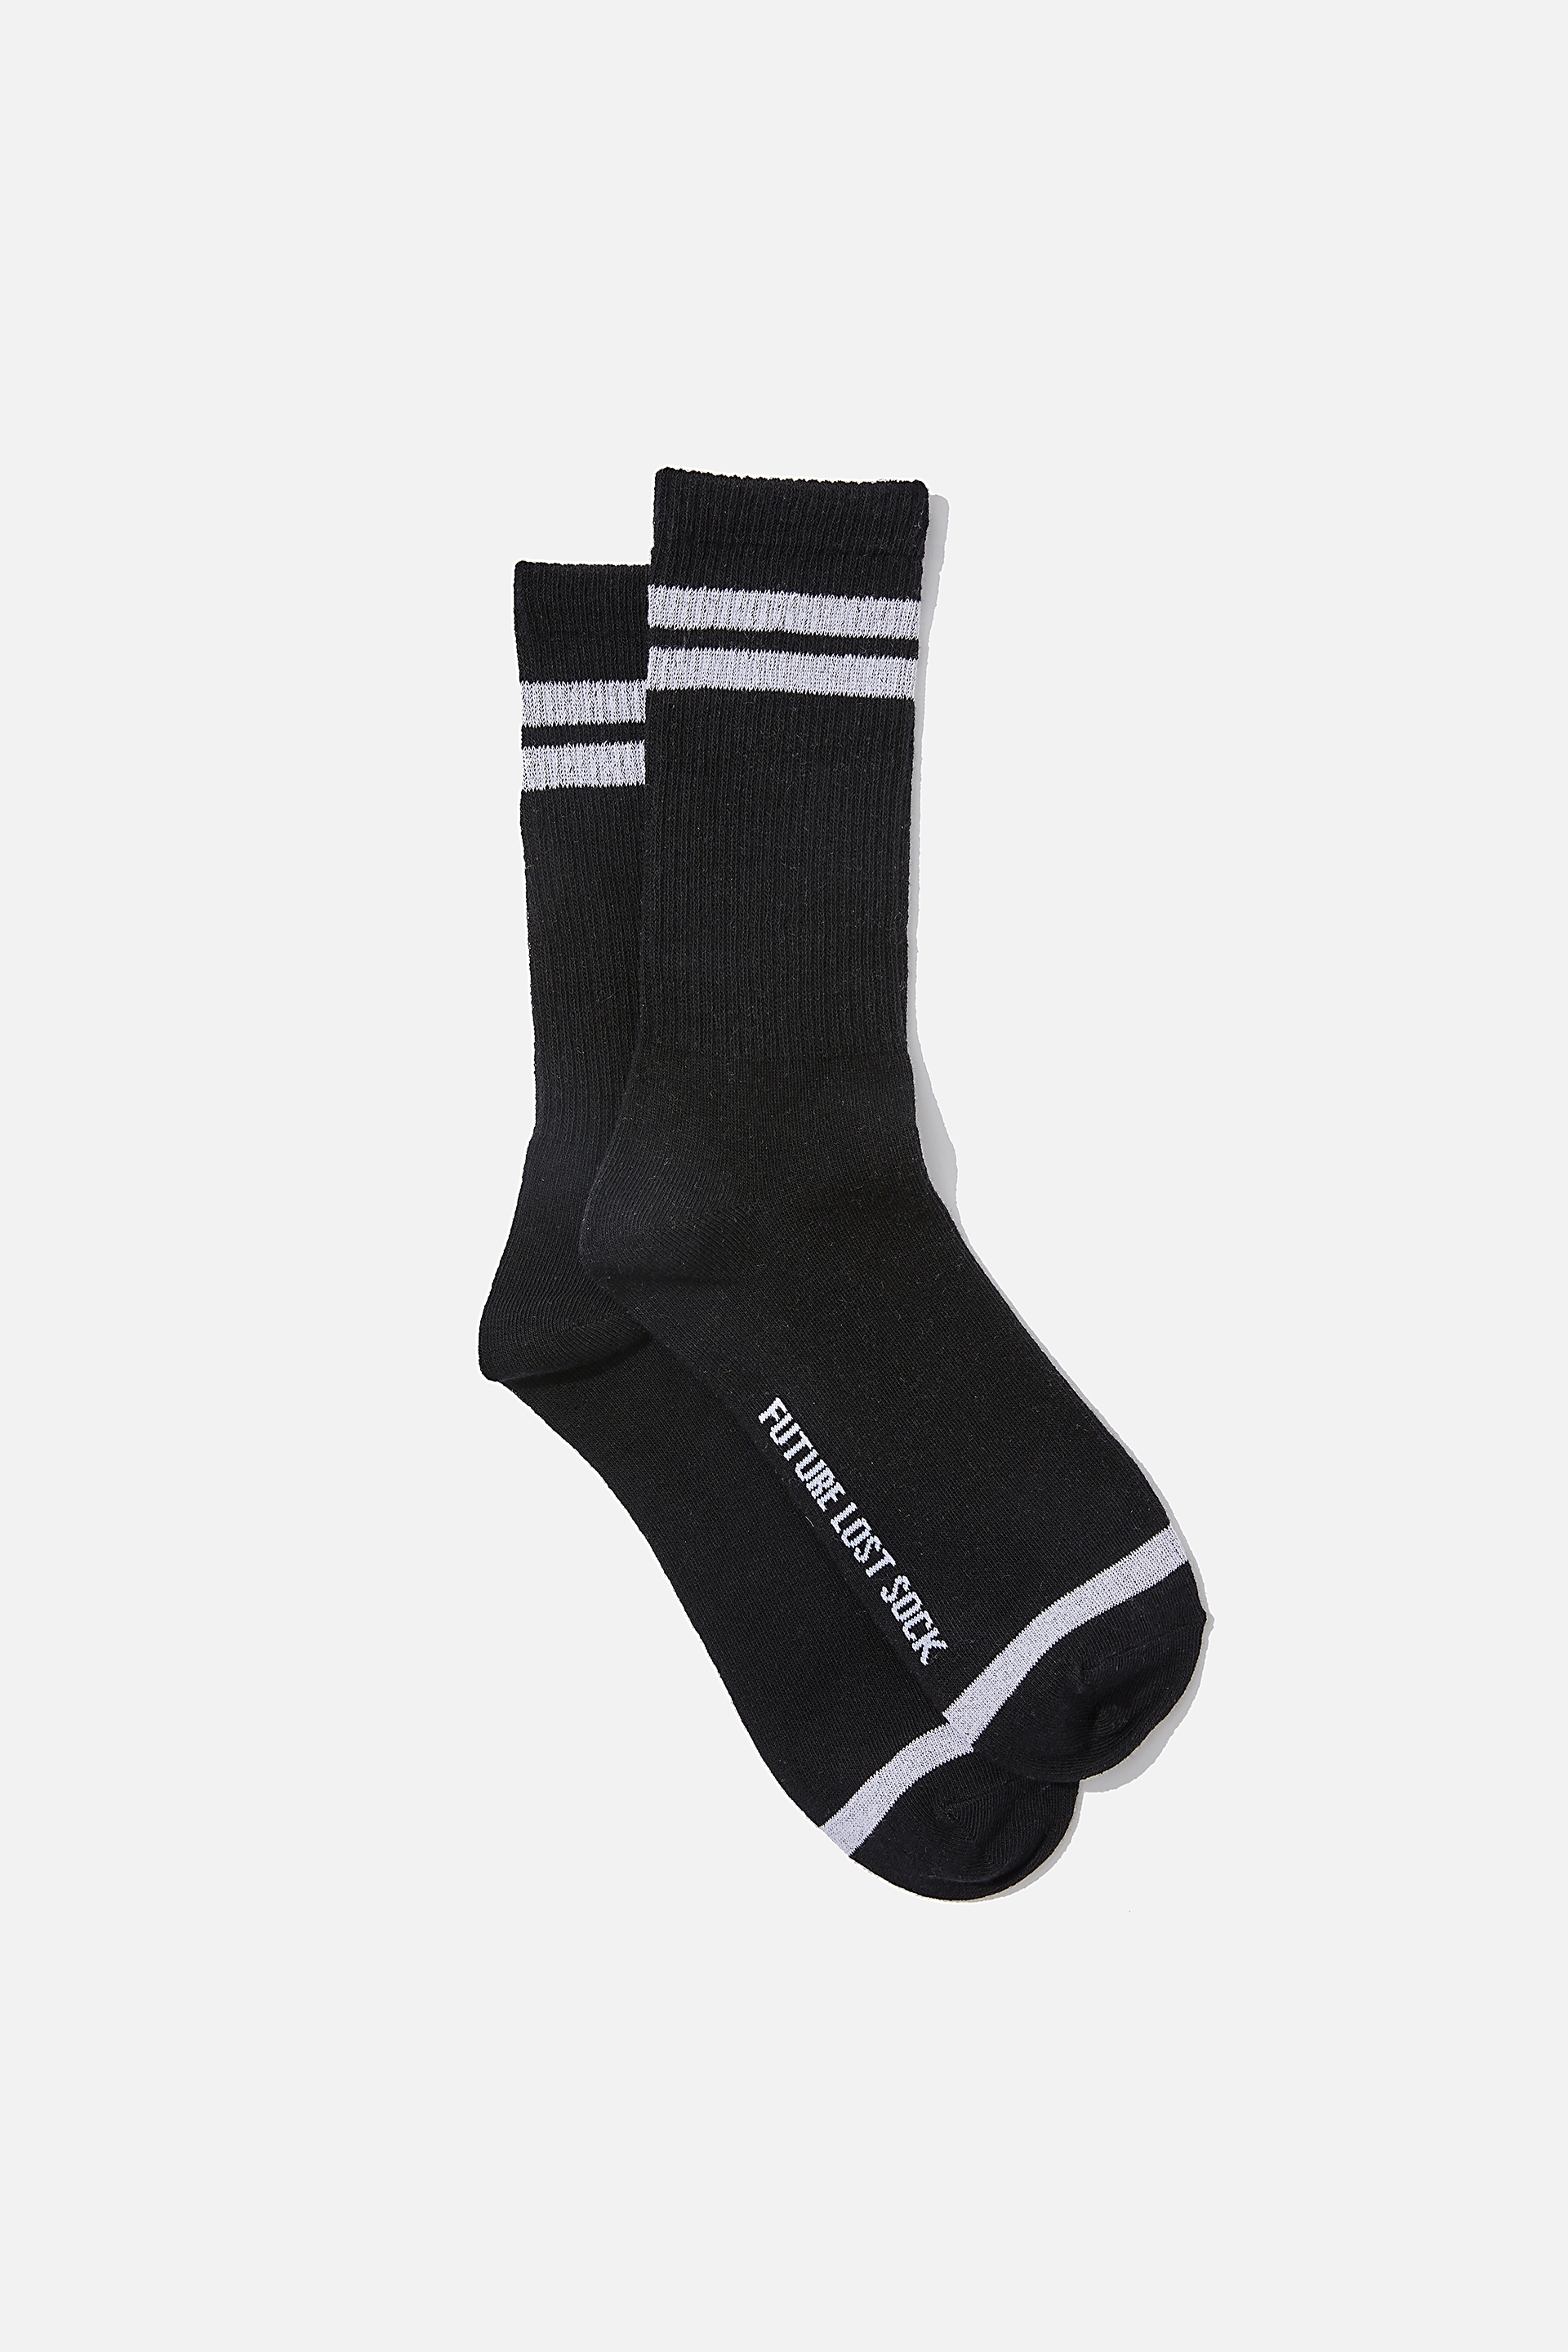 Typo - Socks - Tube future lost sock black